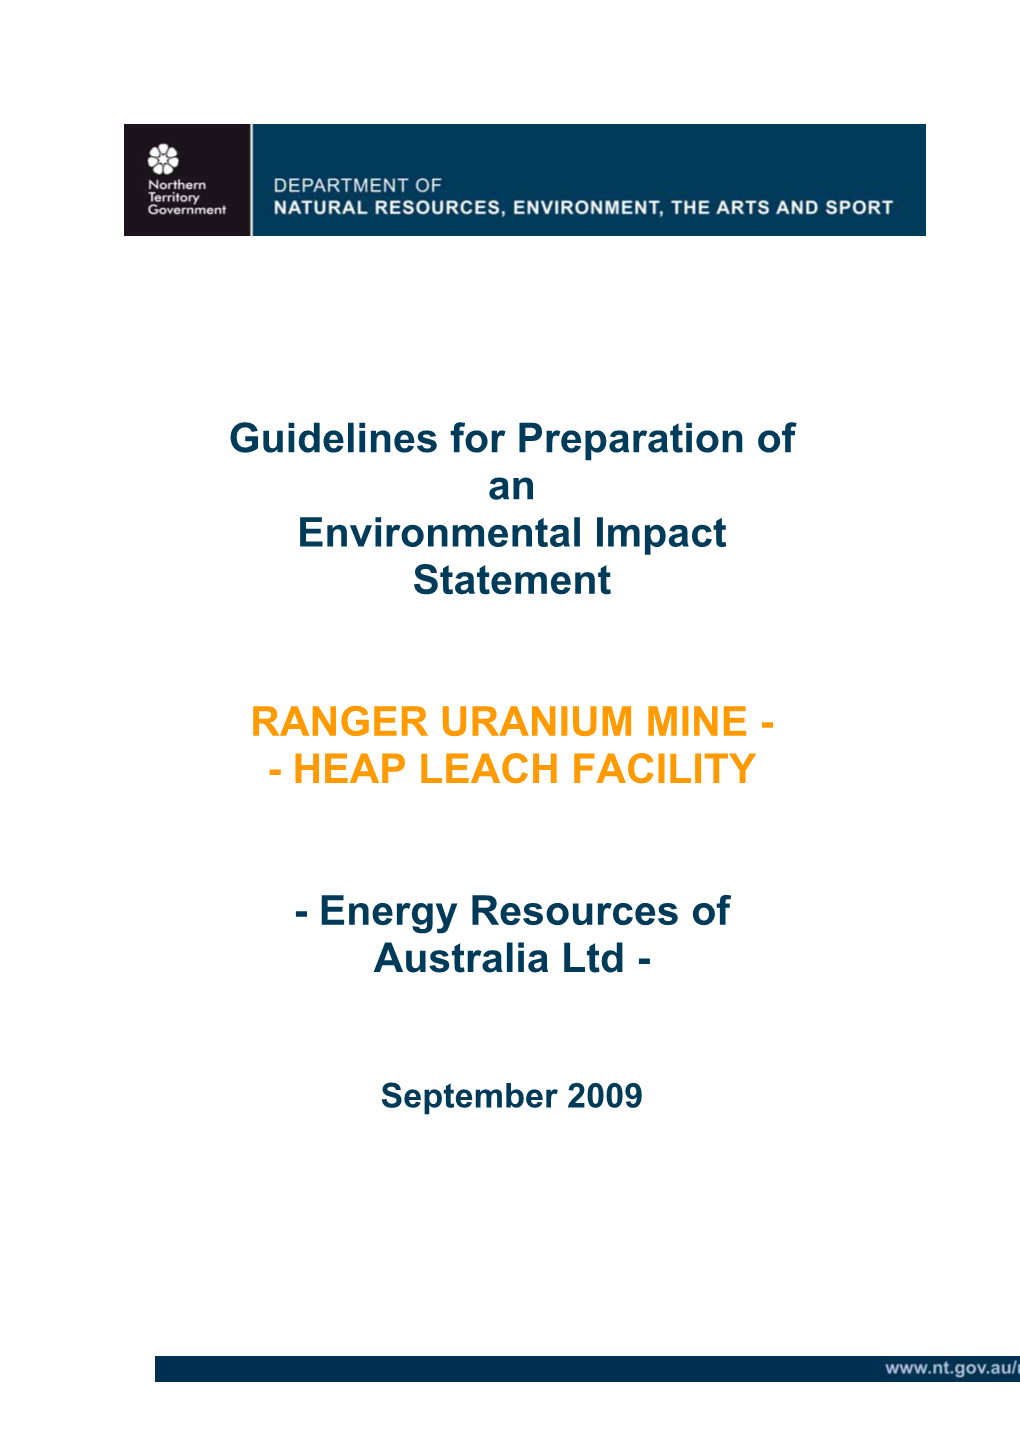 Guidelines for Preparation of an Environmental Impact Statement RANGER URANIUM MINE